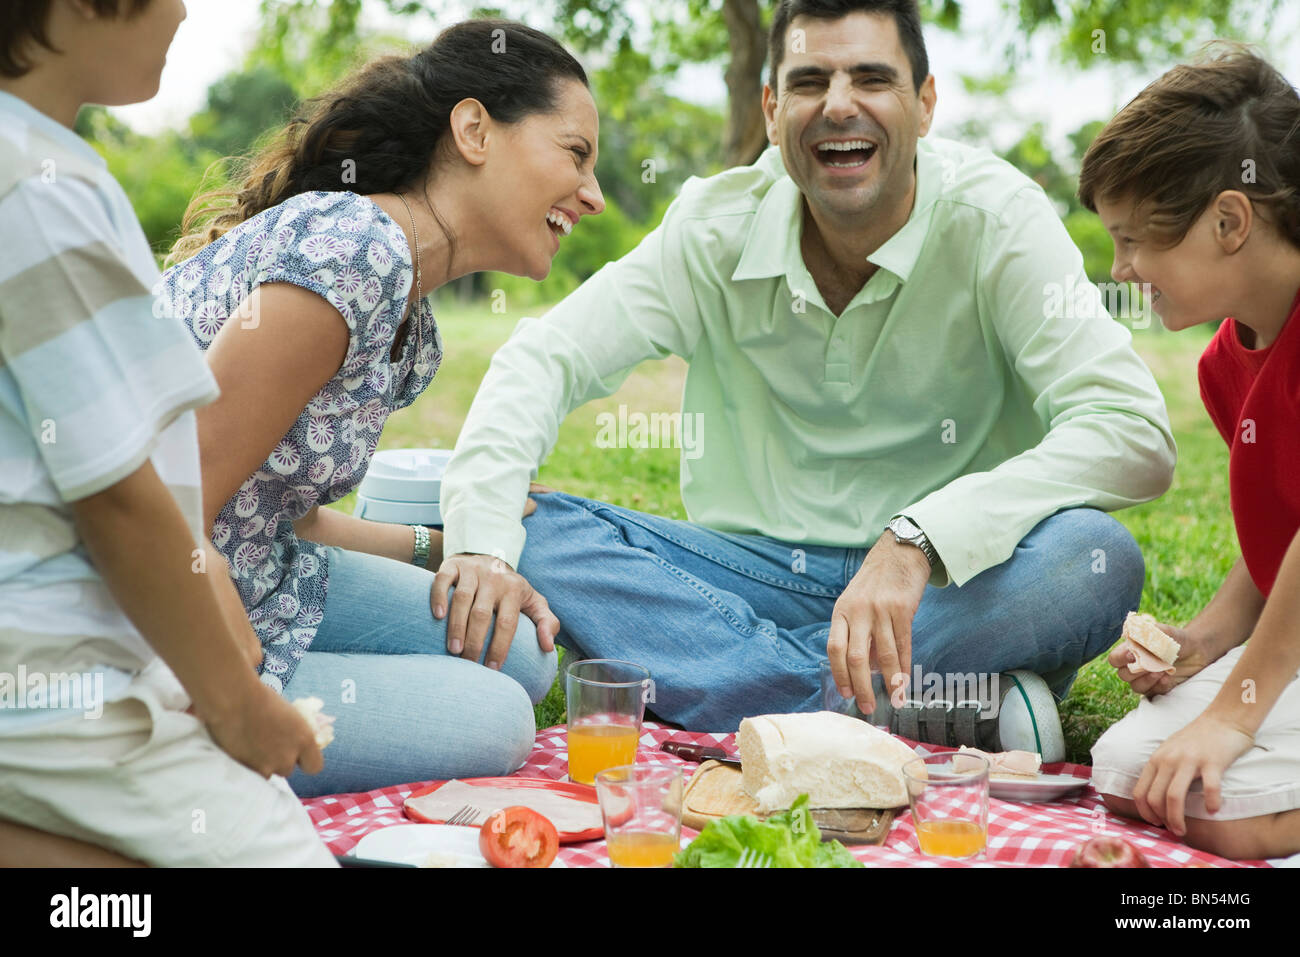 Family enjoying picnic outdoors Stock Photo